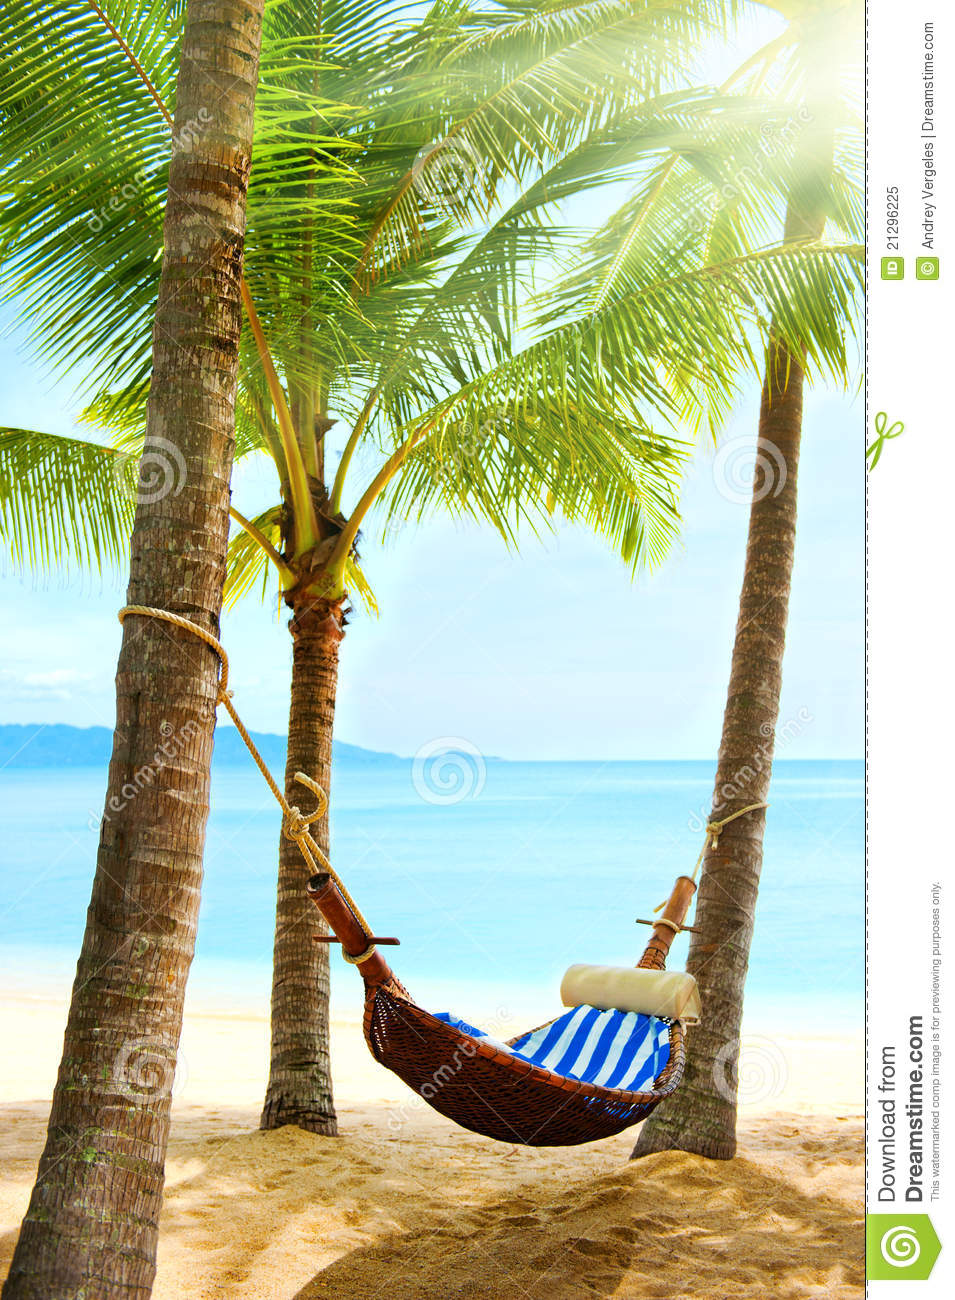 Empty Hammock Between Palm Trees Royalty Free Stock Photo   Image